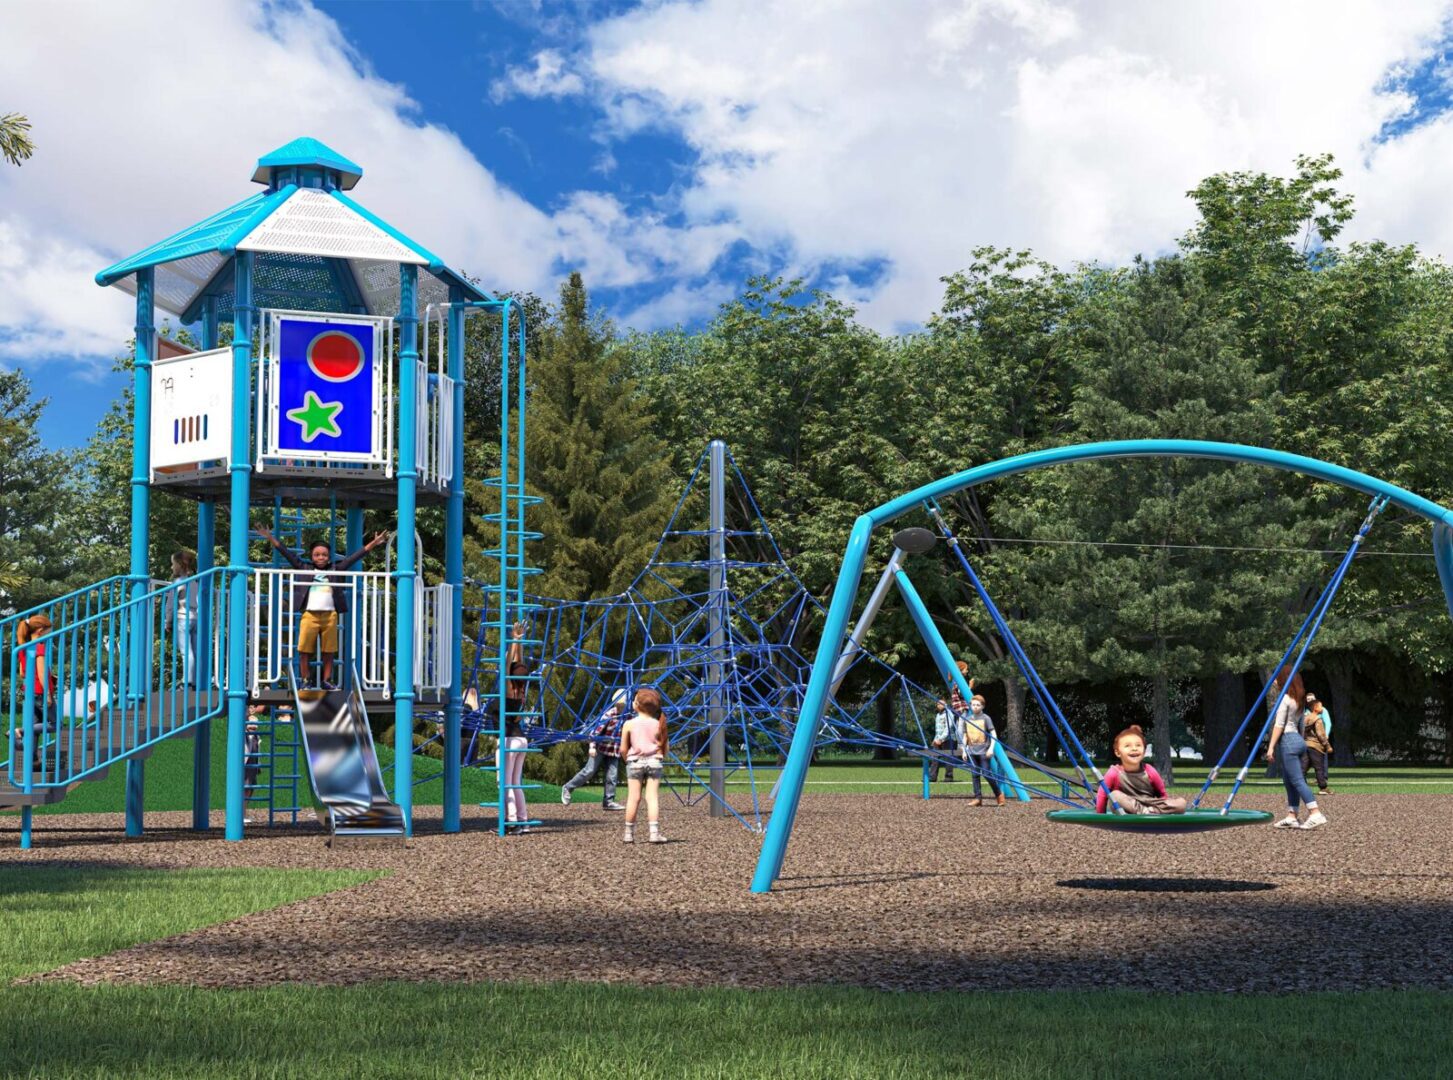 A blue playground